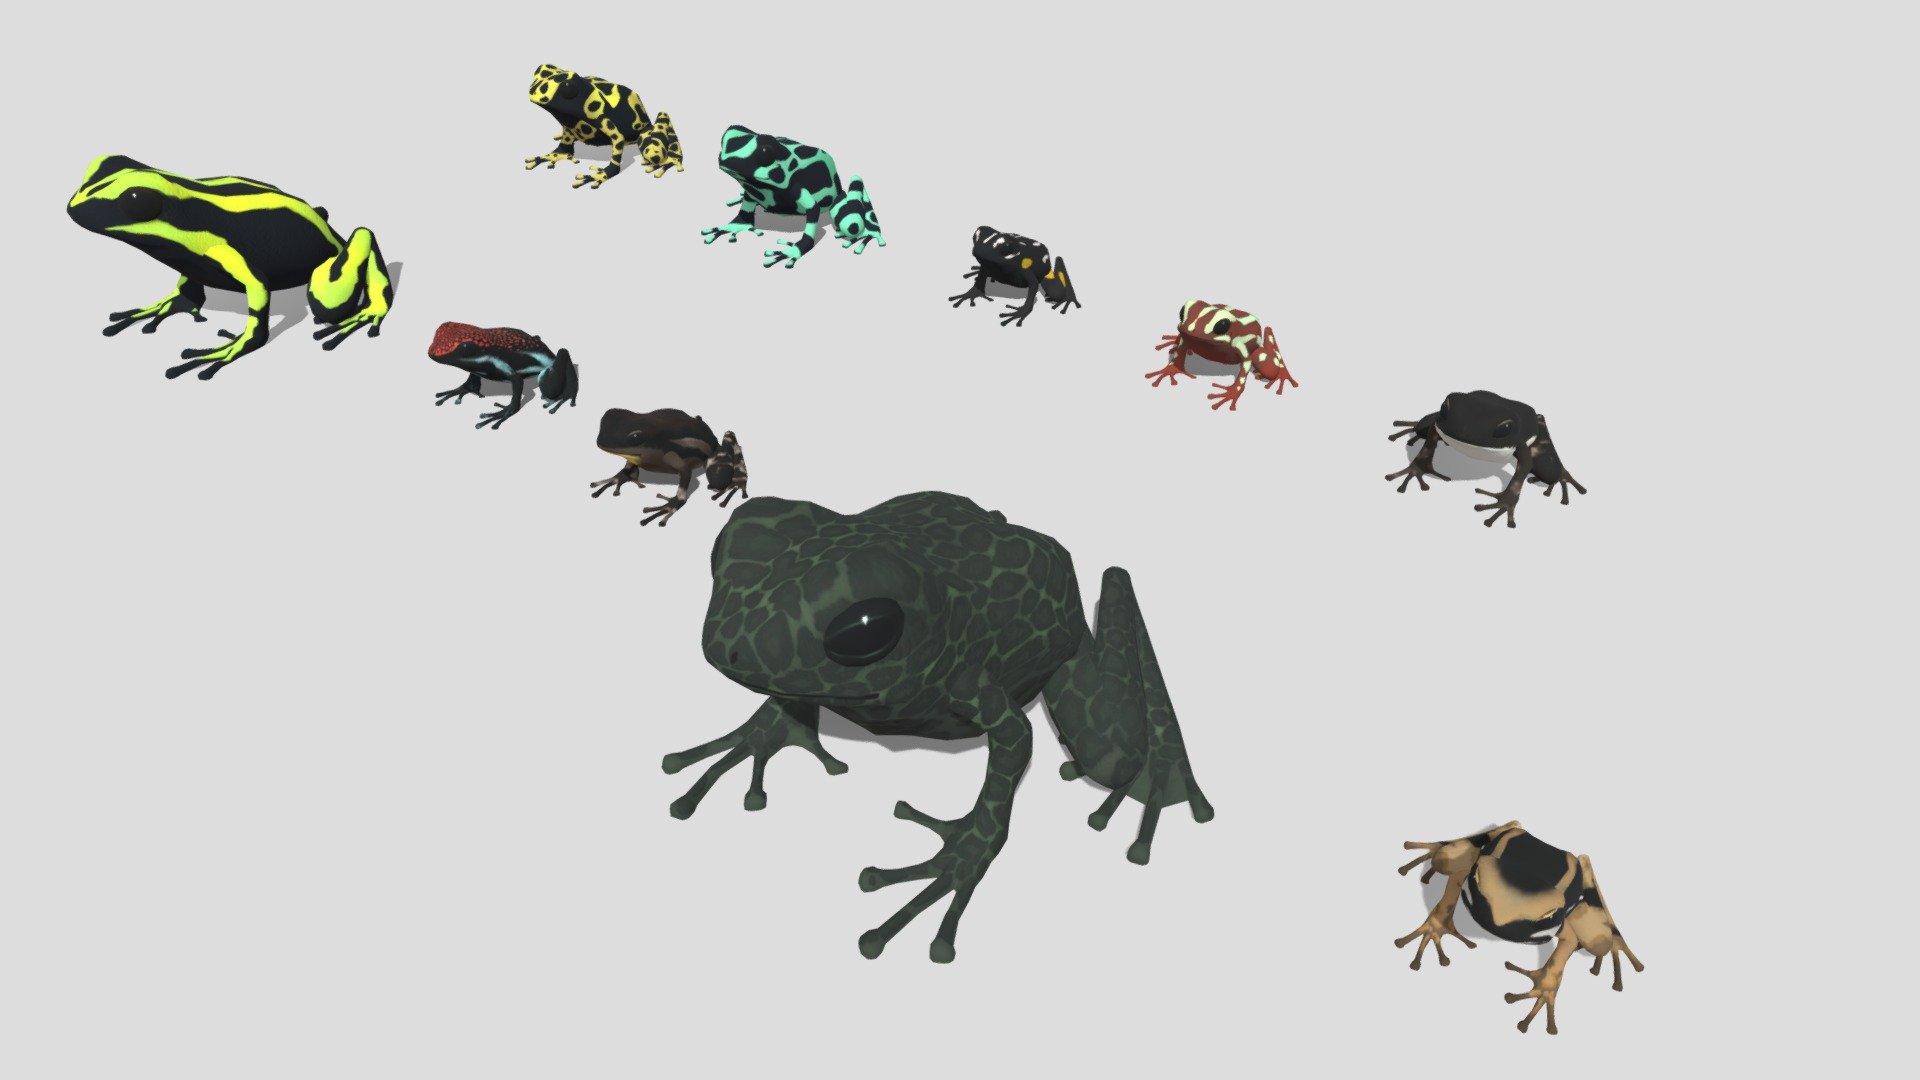 10 kinds of Poison dart frog [1]




和 タラマンカヤドクガエル / 英 Talamanca Rocket Frog / 学 Allobates talamancae

和 ニオイヤドクガエル / 英 Venezuelan Skunk Frog / 学 Aromobates nocturnus

和 トリニダードヤドクガエル / 英 Yellow-throated Frog  / 学 Mannophryne trinitatis

和 ルビーヤドクガエル / 英 Ruby Poison Frog / 学 Ameerega parvula

和 ミスジヤドクガエル / 英 Three Striped Poison Frog / 学 Ameerega trivittata

和 パナマコオイガエル / 英 Panama Rocket Frog / 学 Colostethus panamansis

和 ミイロヤドクガエル / 英 Phantasmal poison-arrow frog / 学 Epipedobates tricolor

和 ブラジルナッツヤドクガエル / 英 Brazil-nut Poizon Frog / 学 Adelphobates castaneoticus

和 ミドリヤドクガエル, マダラヤドクガエル / 英 Green Poison Frog / 学 Dendrobates auratus

和 キオビヤドクガエル / 英 Yellow-headed Poison Frog / 学 Dendrobates leucomelas
 - 10 kinds of Poison dart frog [1] - 3D model by Mozukui (@redfrogman) 3d model